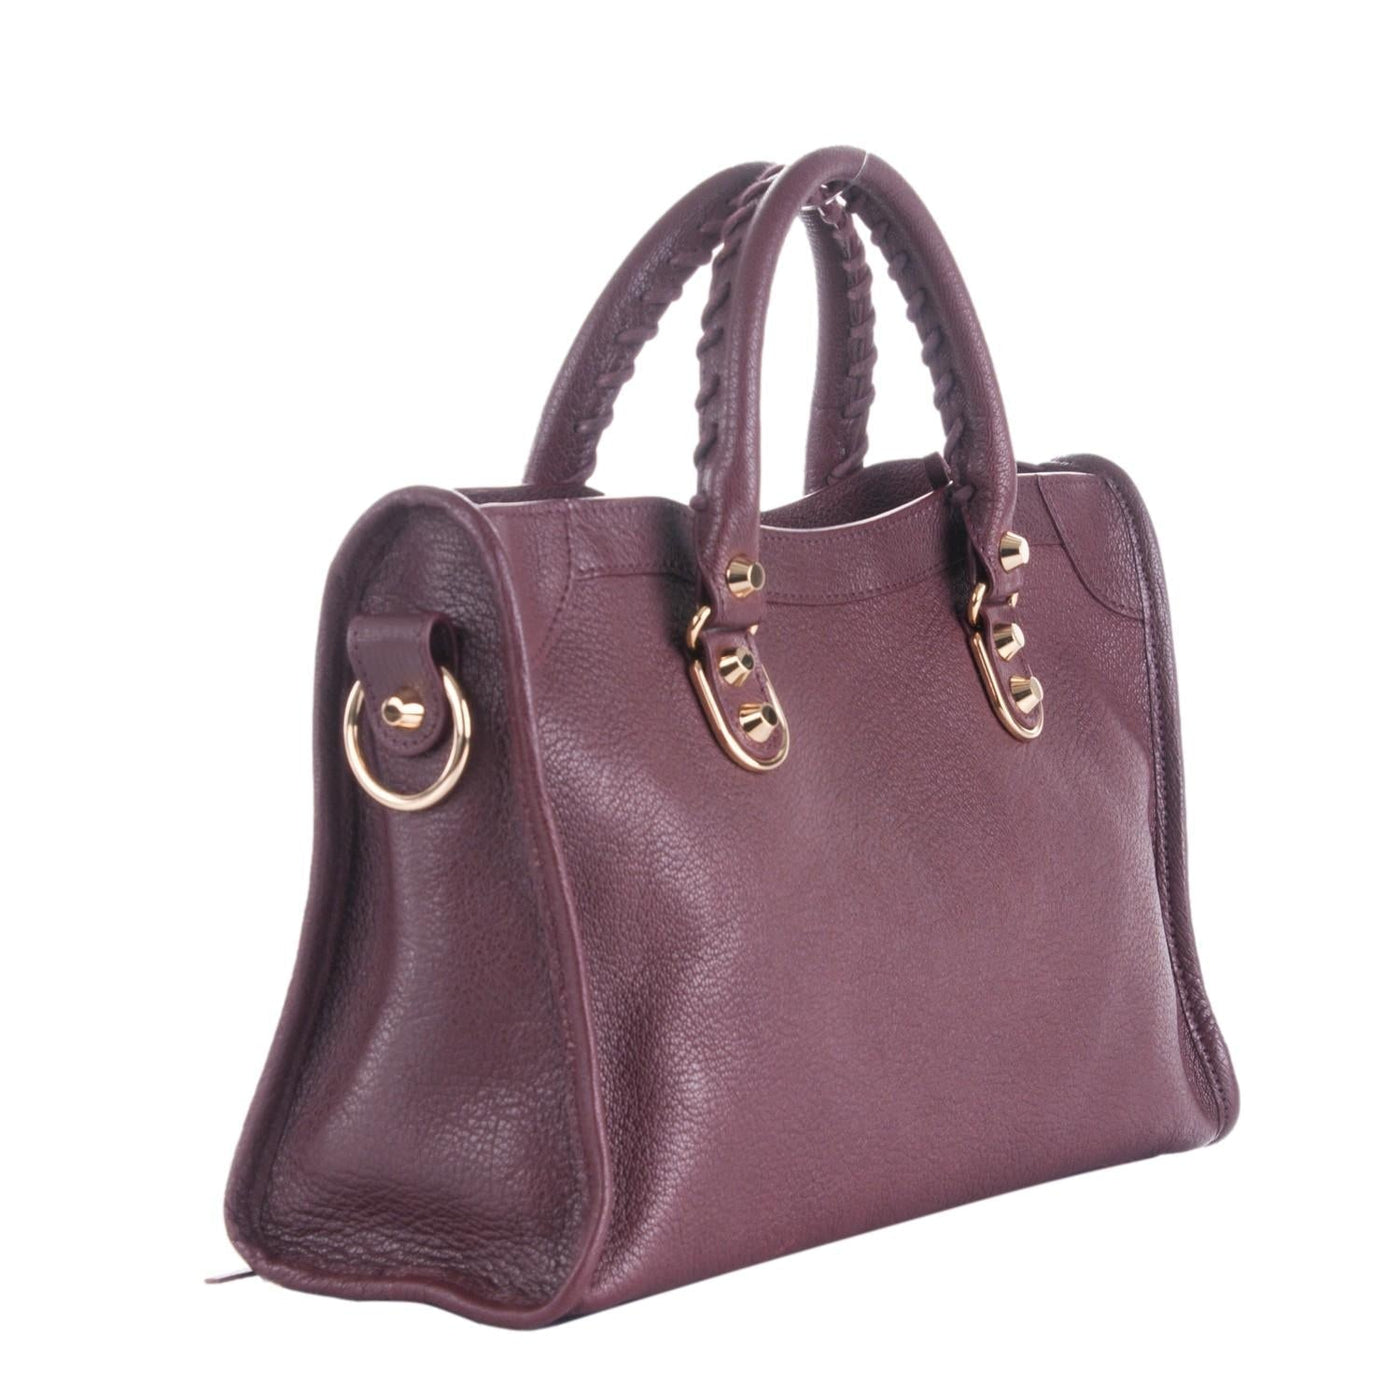 Balenciaga City Prune Purple Goat Leather Small Shoulder Bag 432831 - LUXURYMRKT